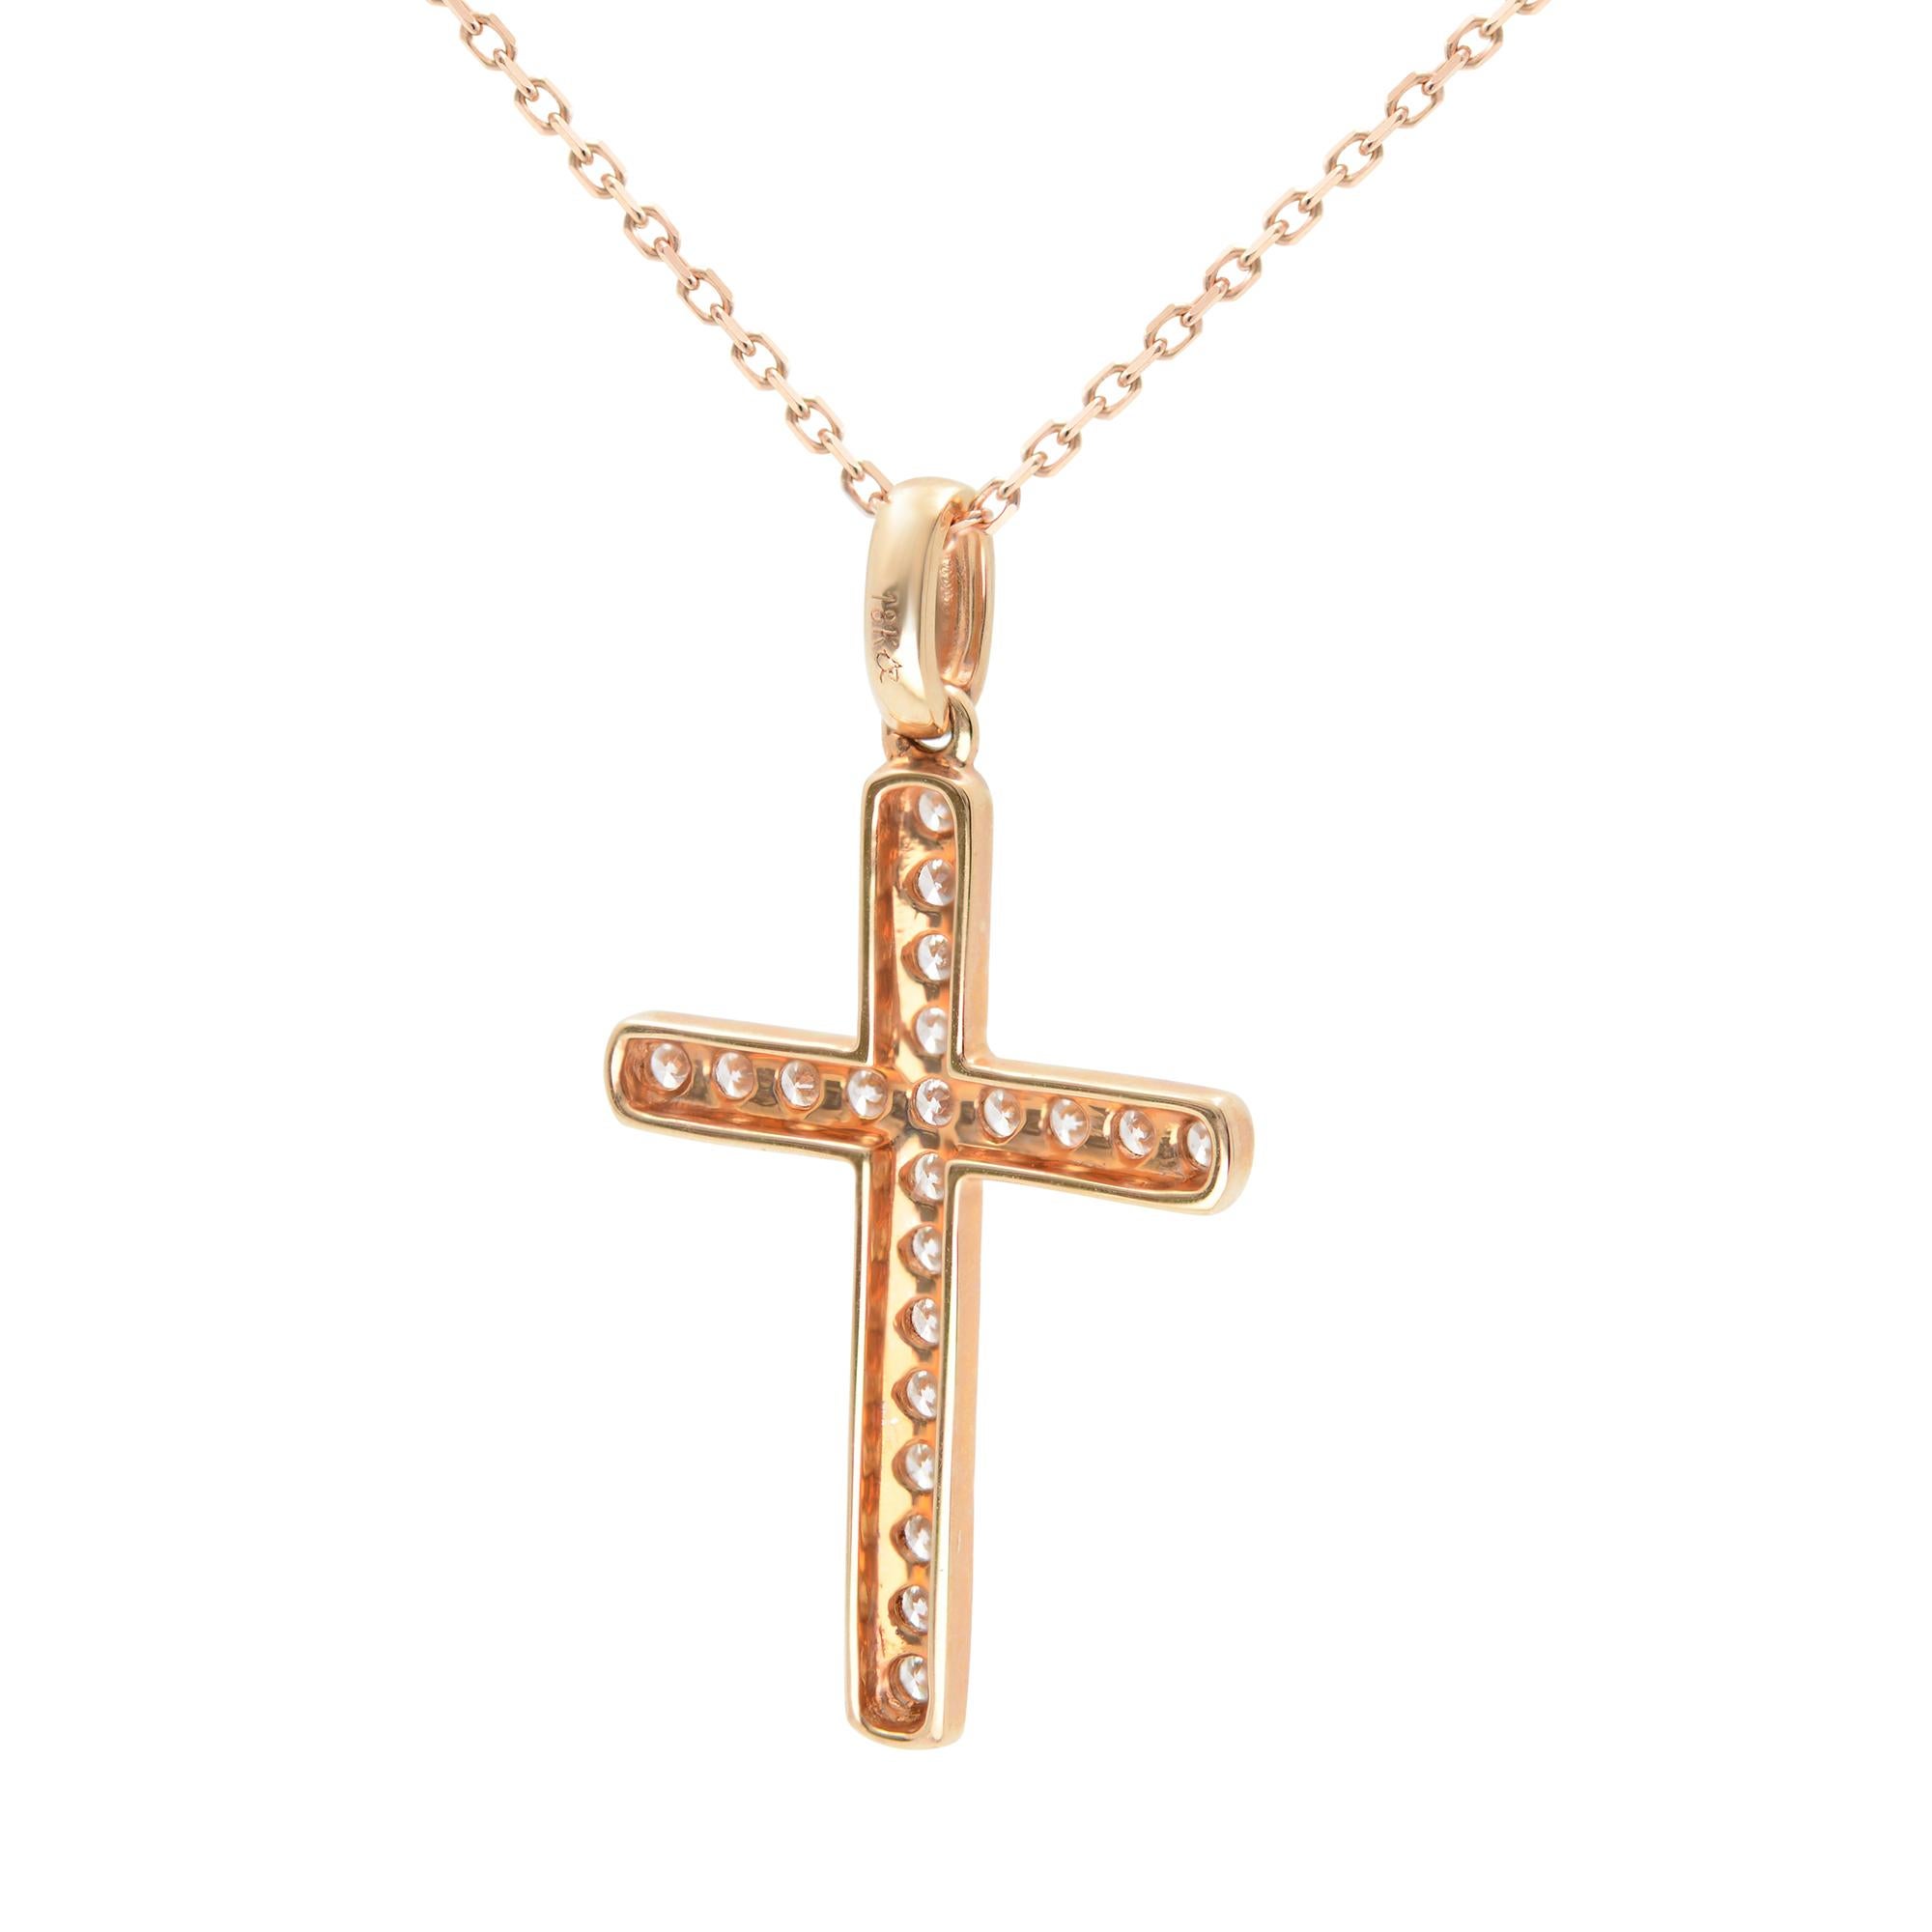 Round Cut Rachel Koen 18k Rose Gold Diamond Ladies Cross Pendant Necklace 0.38cttw